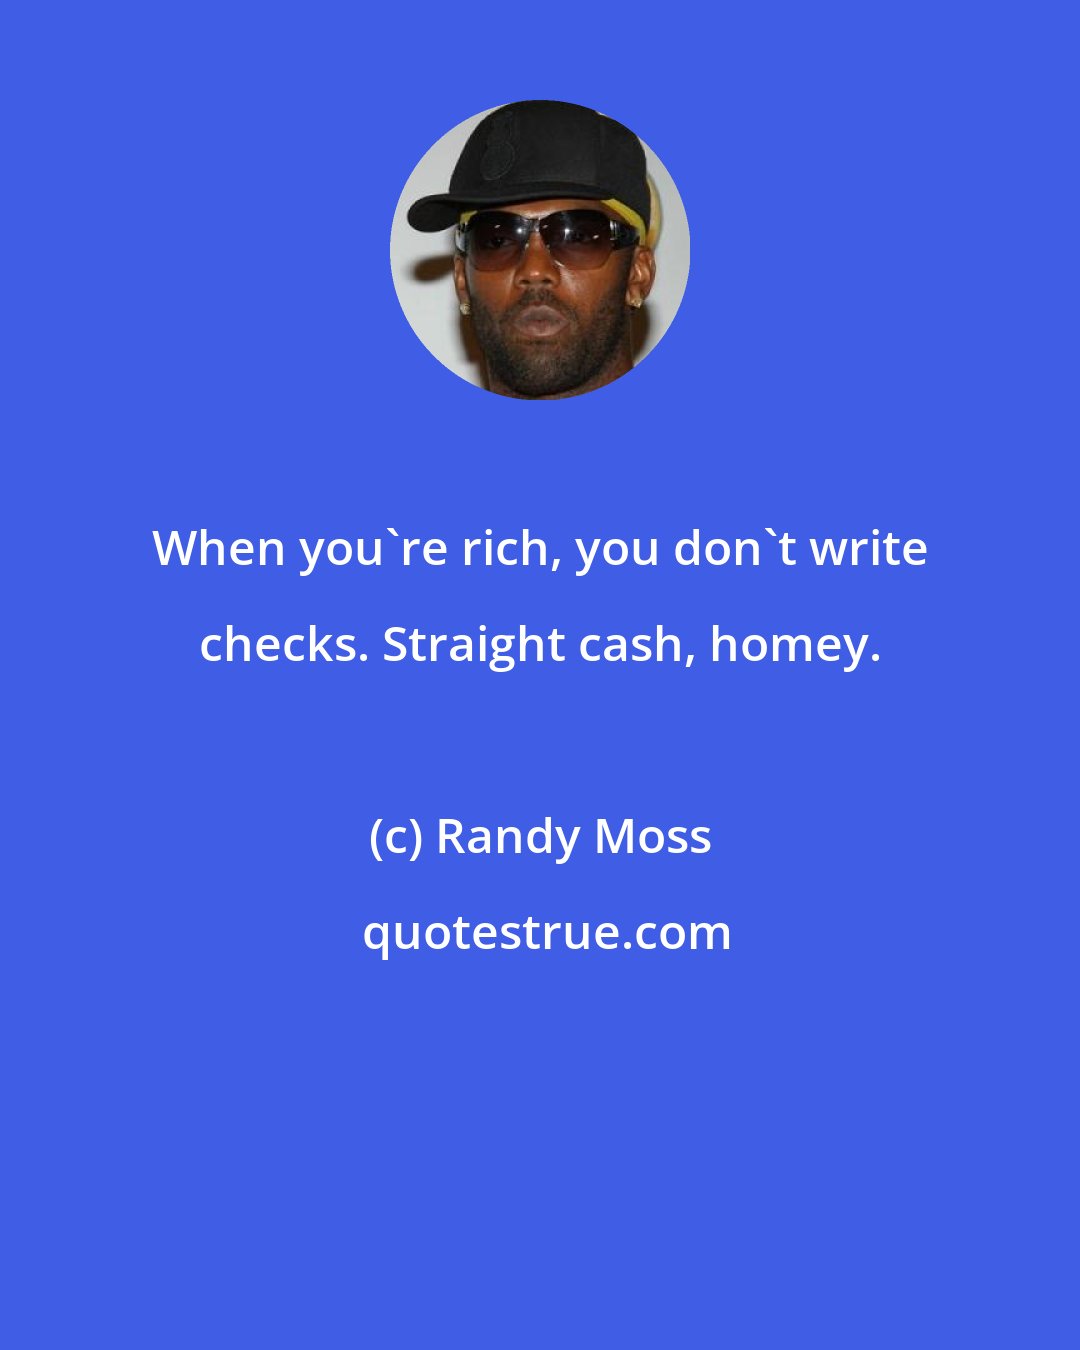 Randy Moss: When you're rich, you don't write checks. Straight cash, homey.